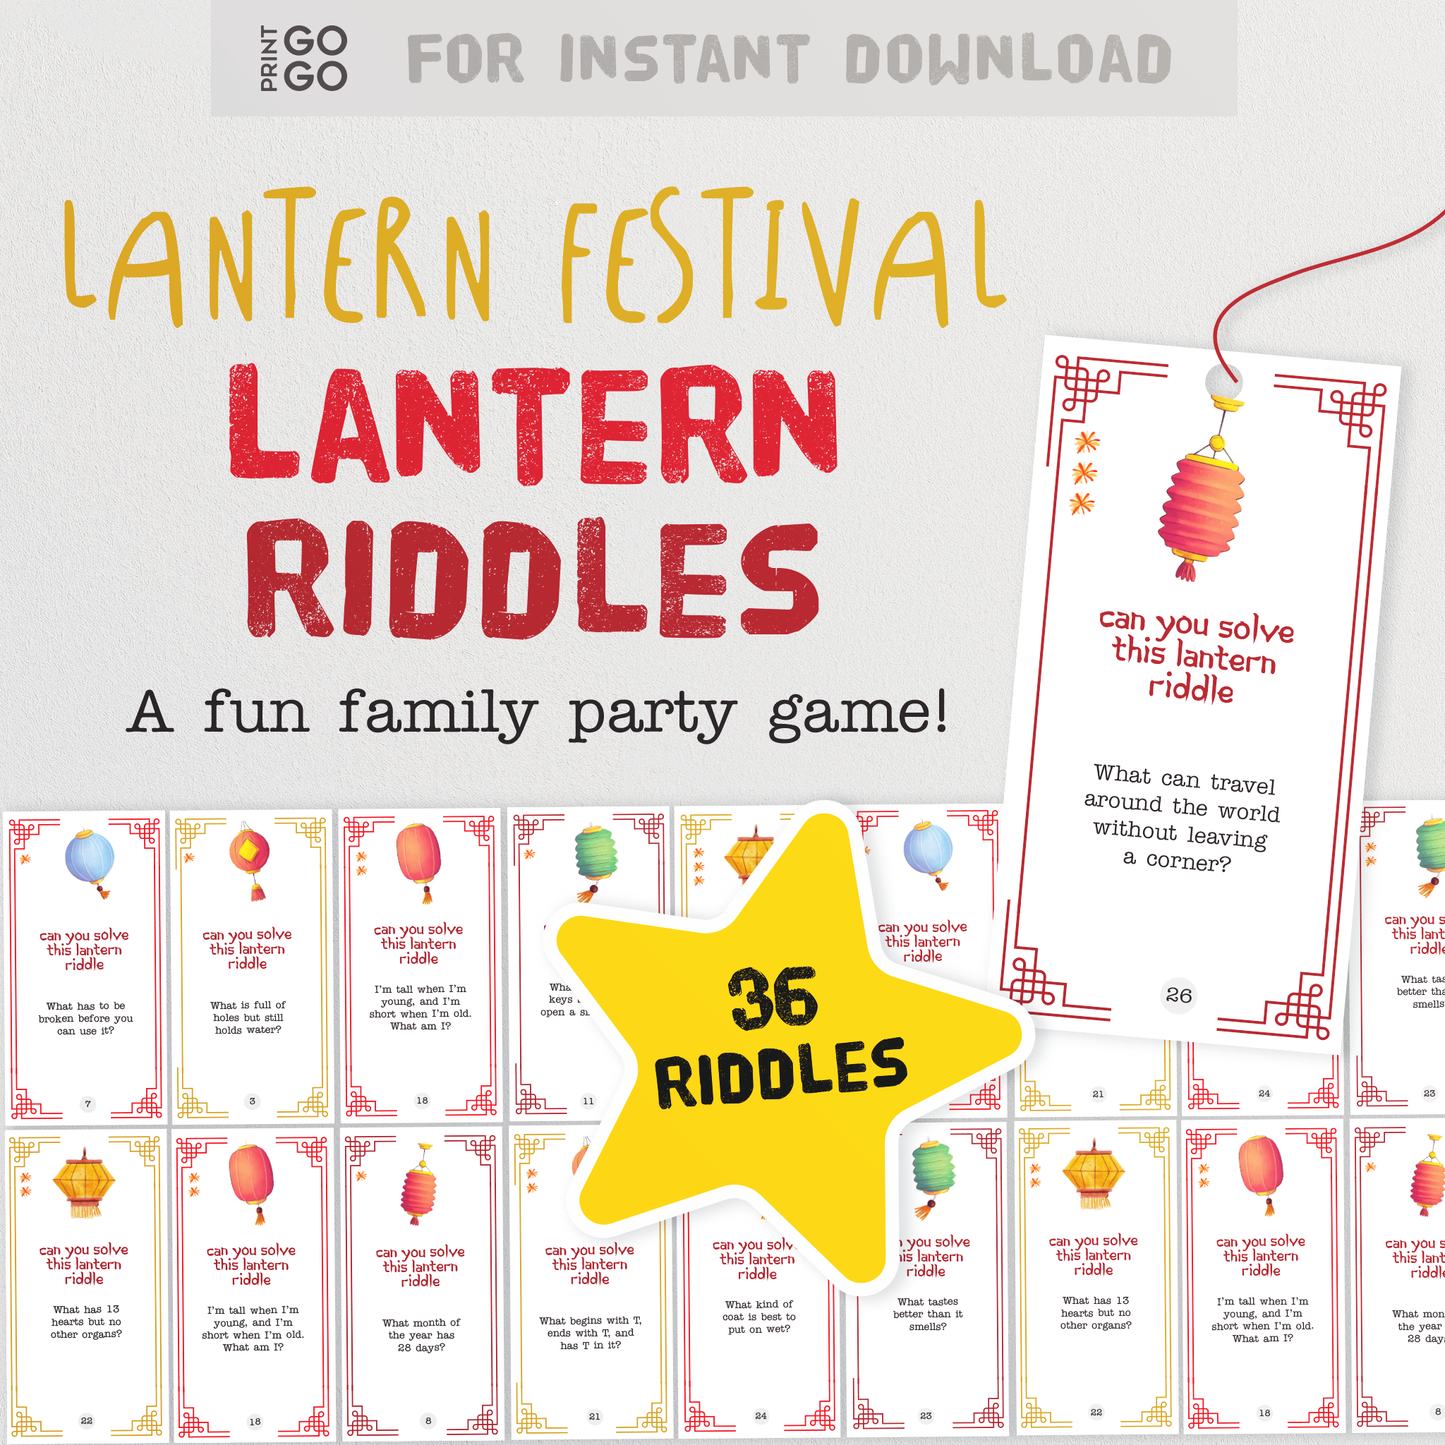 Lantern Festival Lantern Riddles - The Fun Family Party Game of Solving Clues